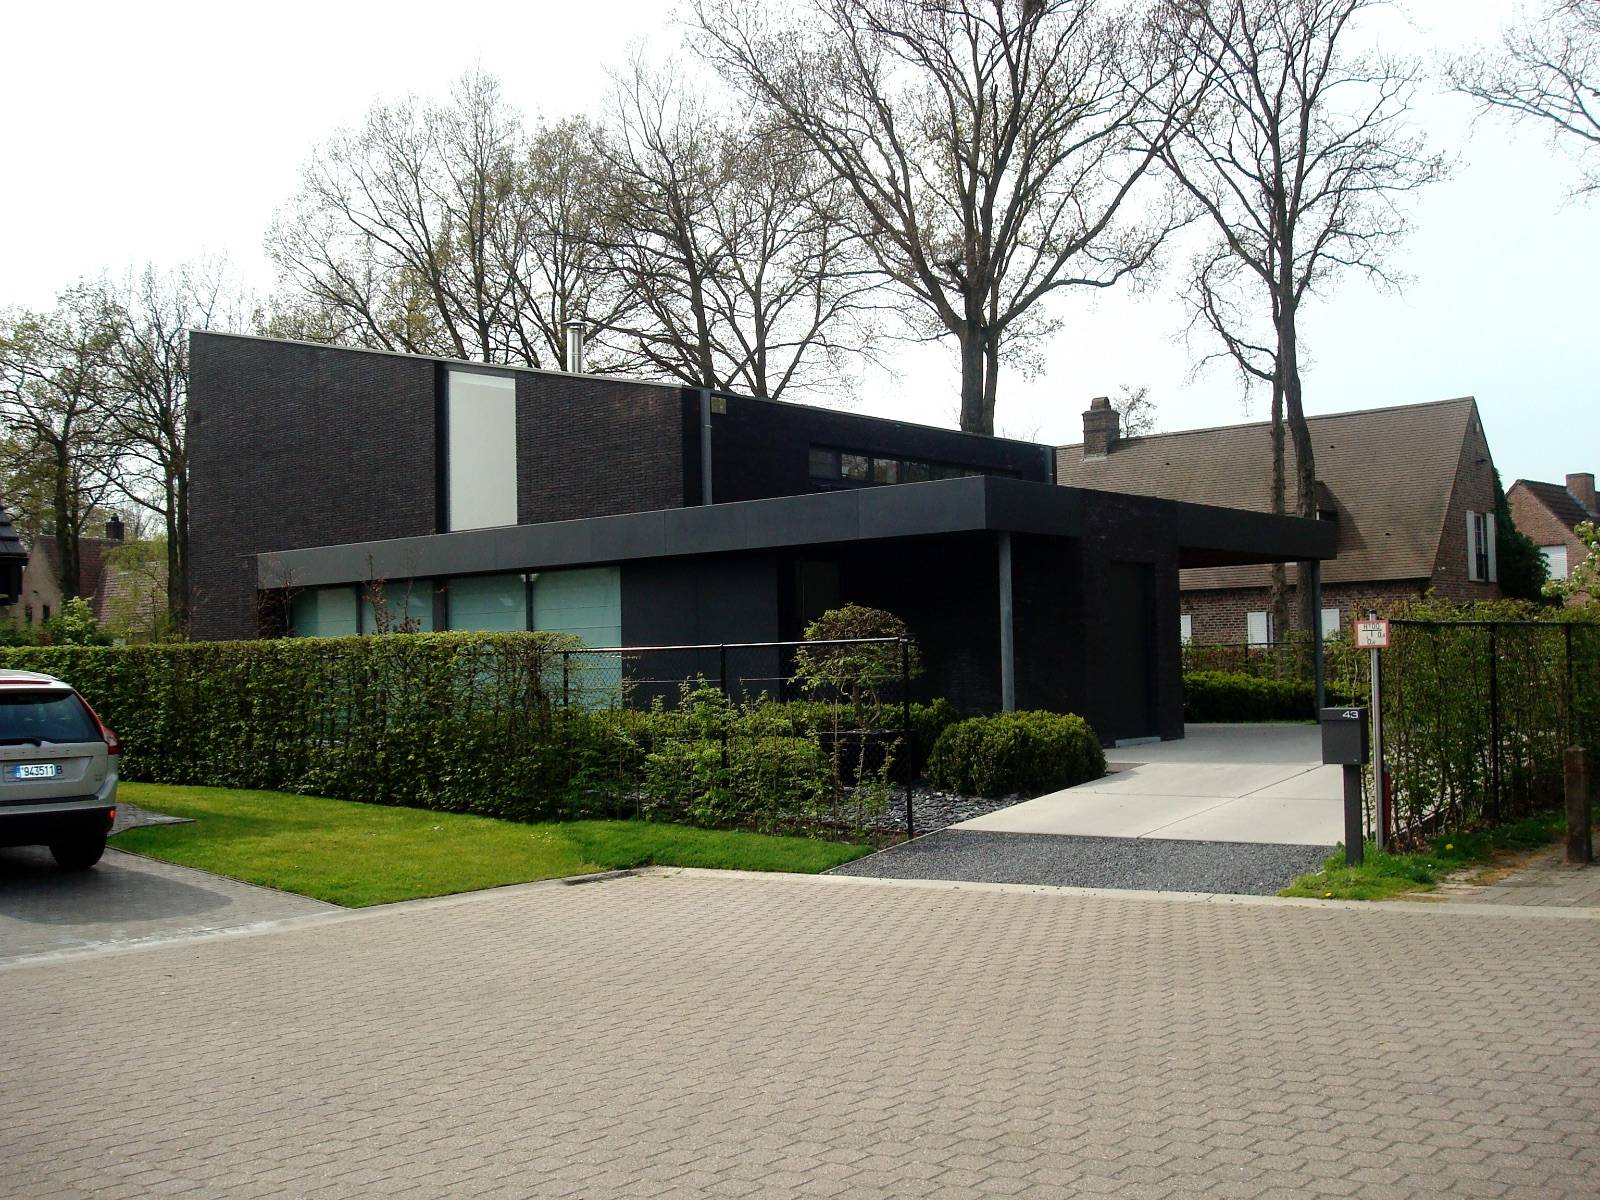 Moderne zwarte nieuwbouwwoning, realisatie van Plan Architectenbureau Brugge